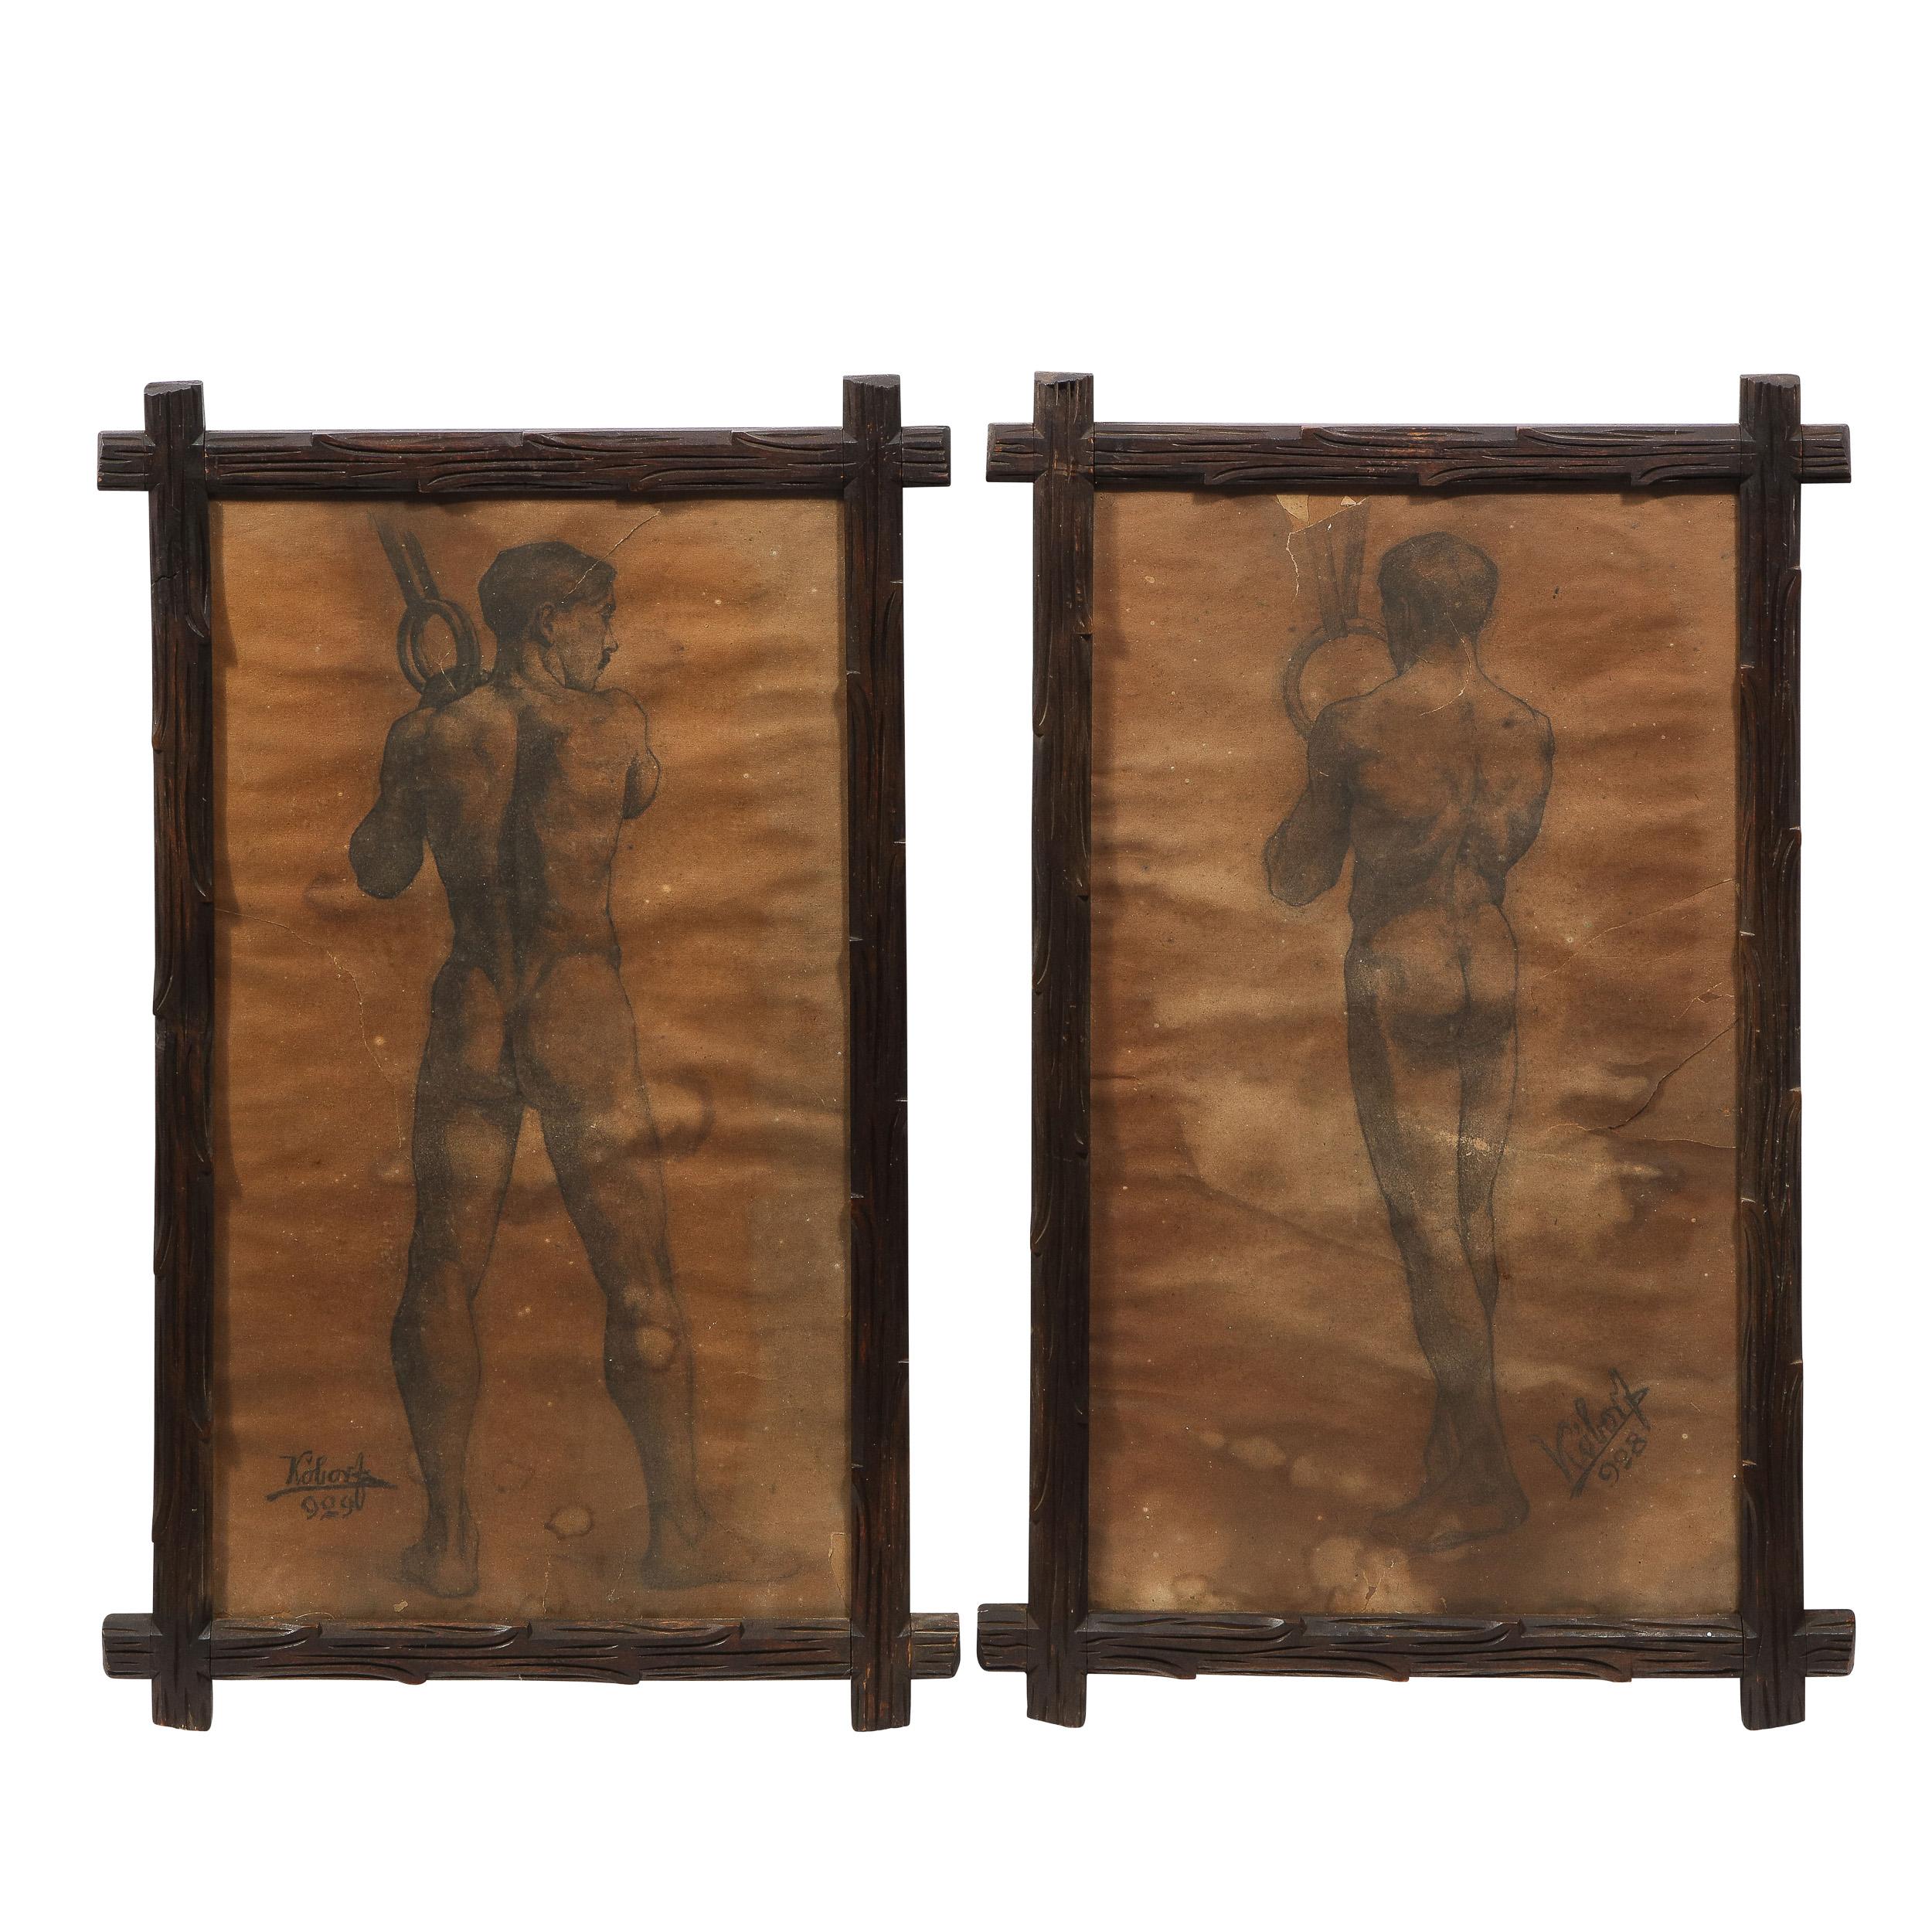 Henrik Kobor Figurative Art - Untitled Nude Male Diptych, Charcoal/ Graphite on Parchment by Henrik Kóbor 